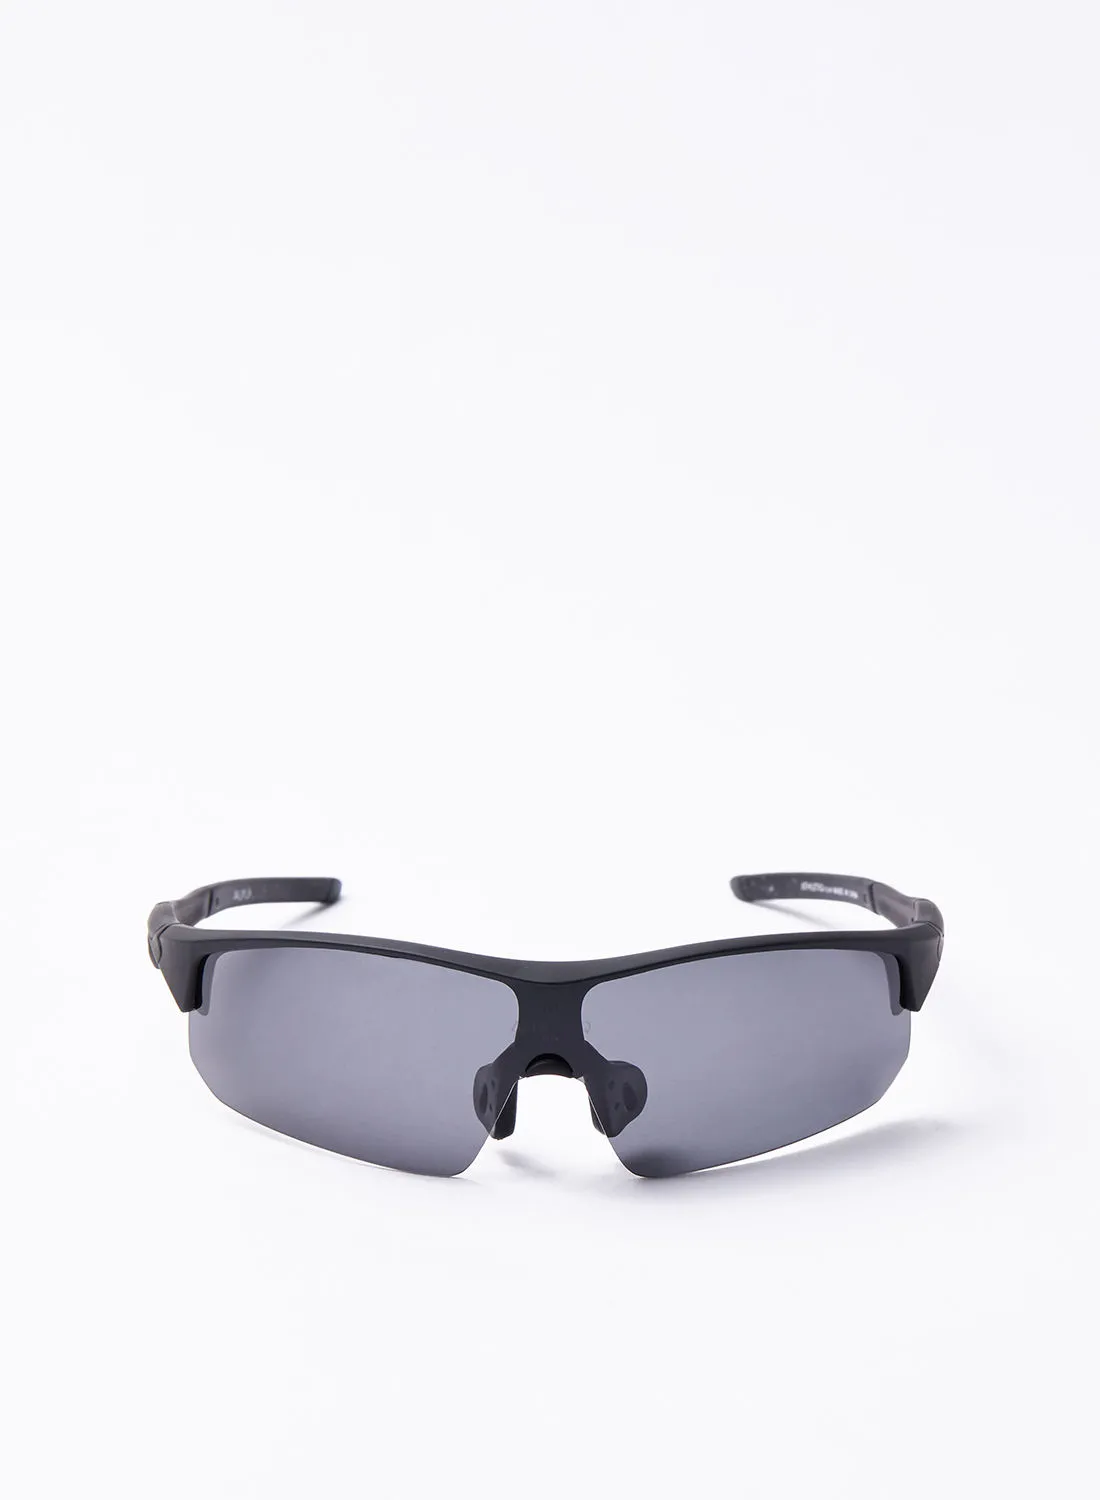 Athletiq Cycling Scooter Sunglasses - Athletiq Club Oryx - Black Frame With Smoke Black Multilayer Mirror Lens